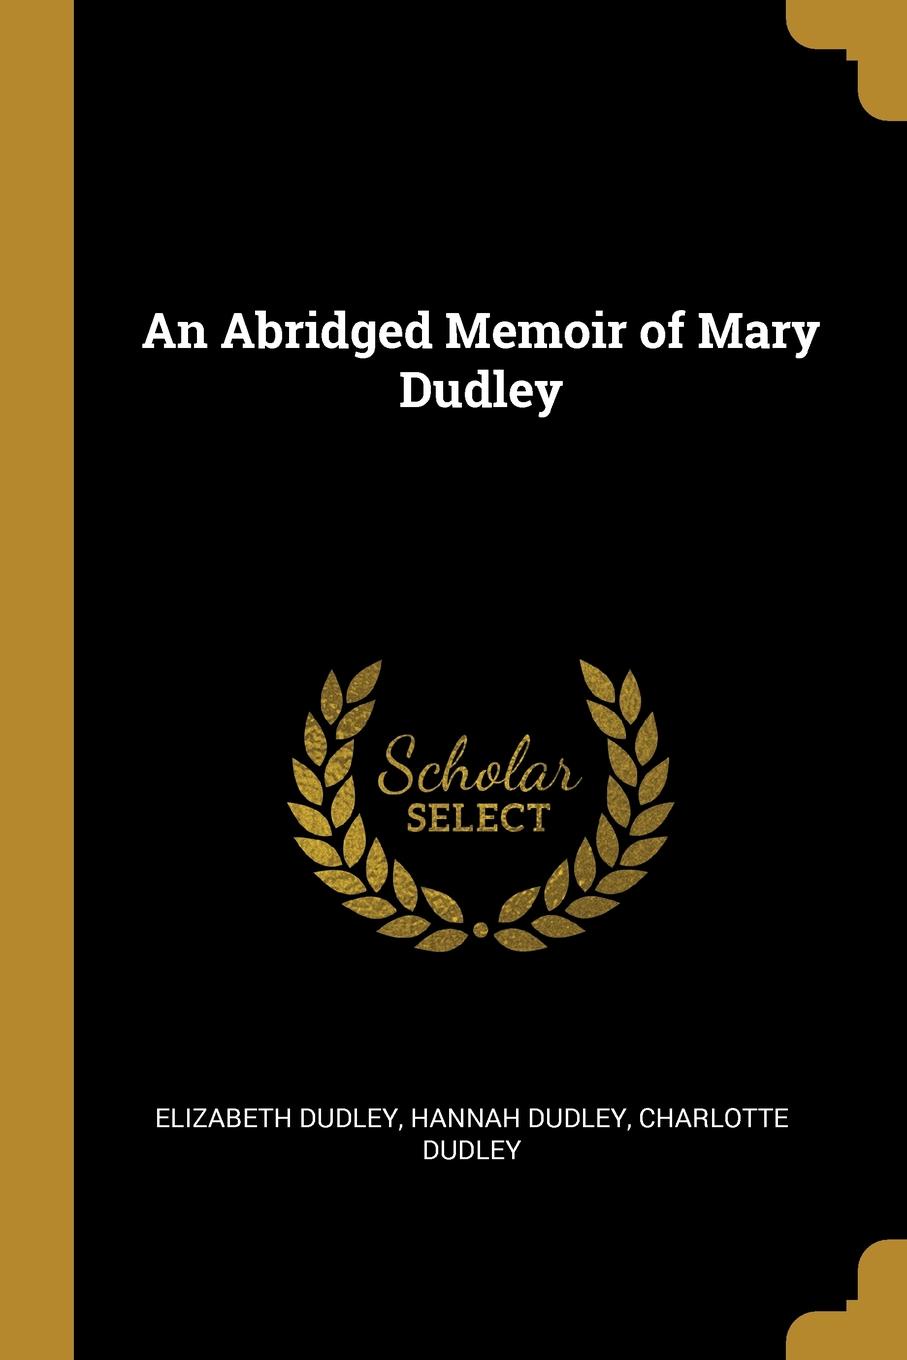 An Abridged Memoir of Mary Dudley